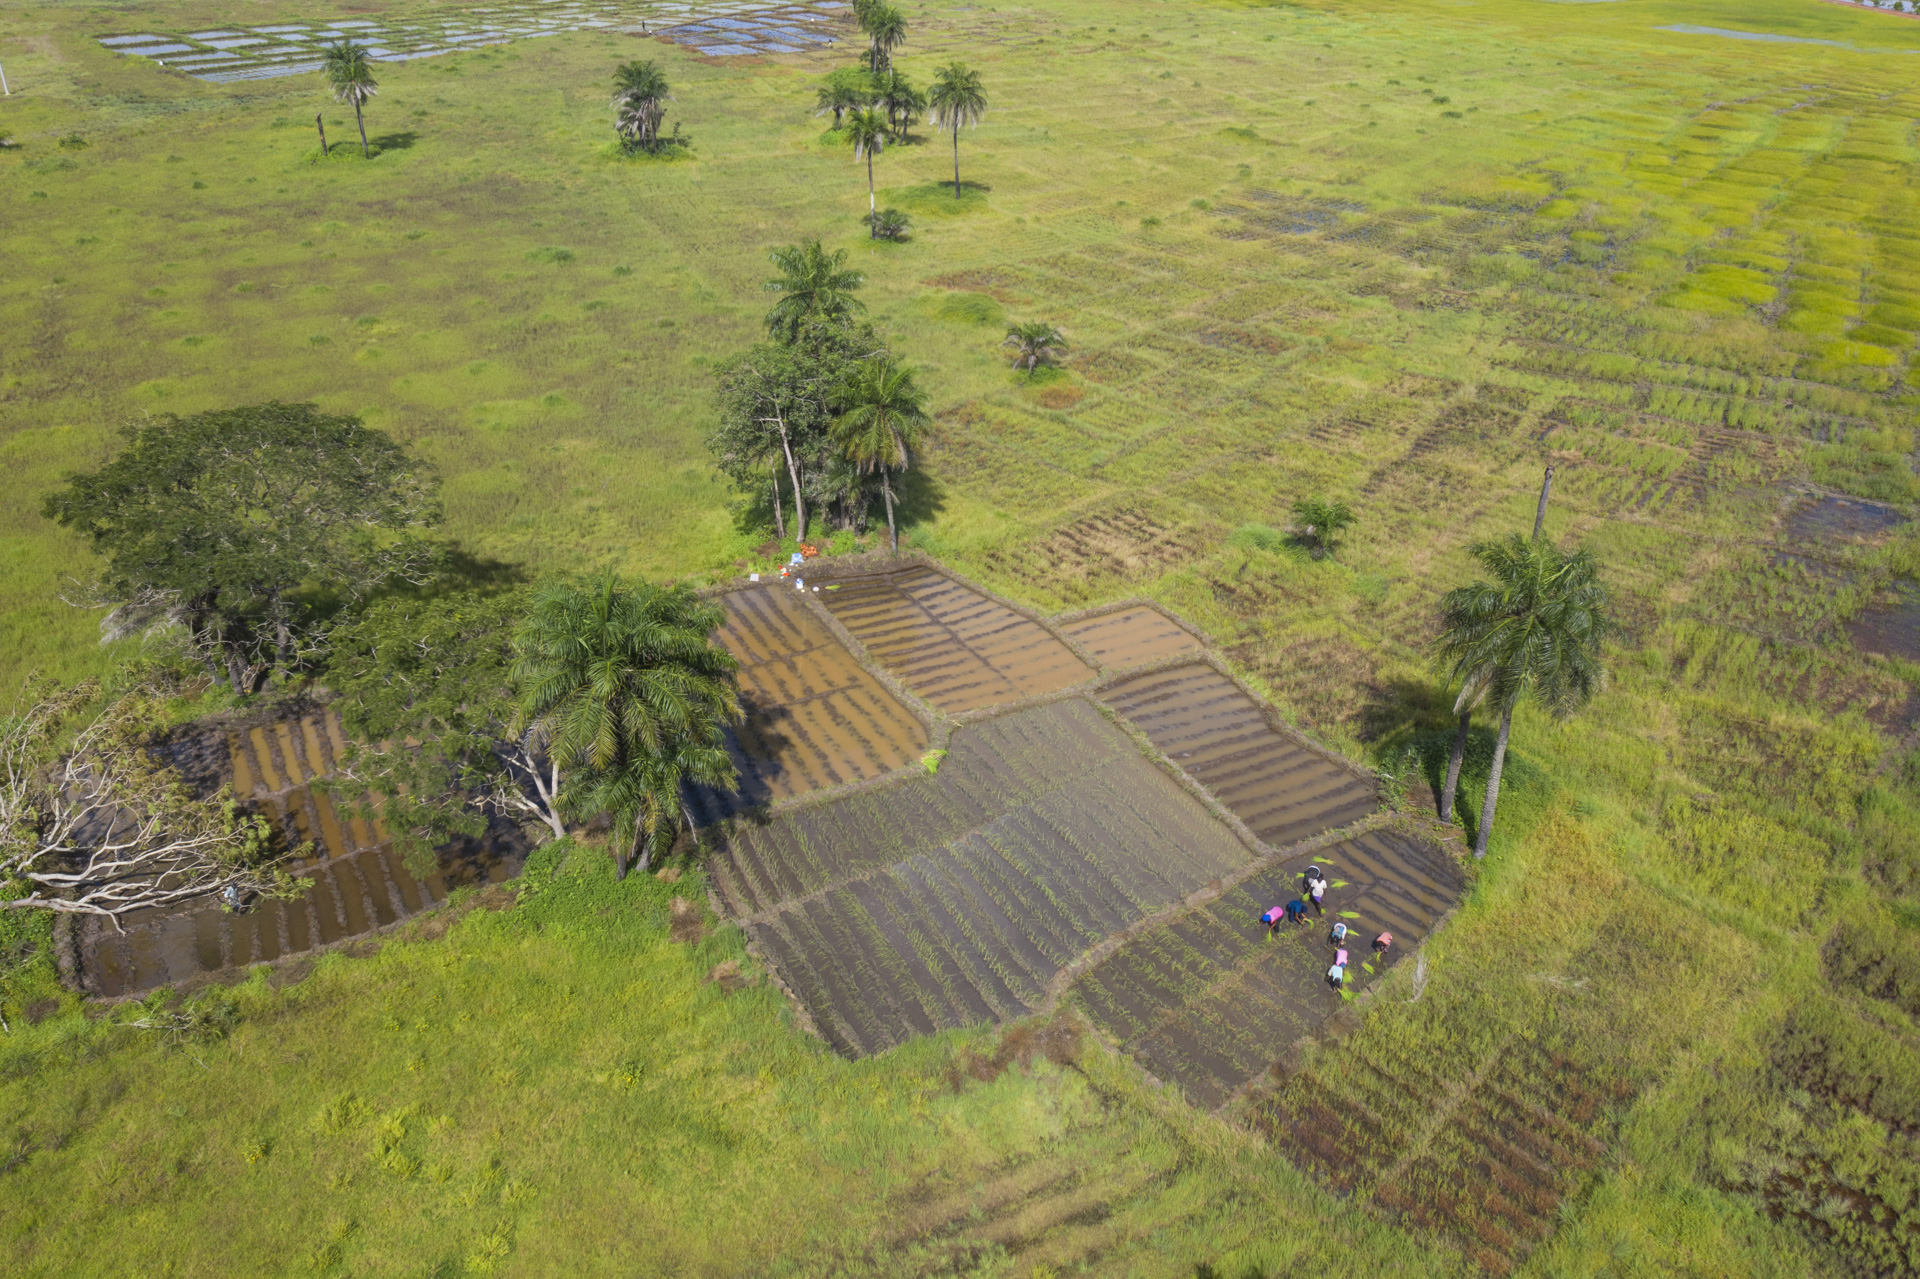 Paddy fields in Casamance. Women transplanting rice